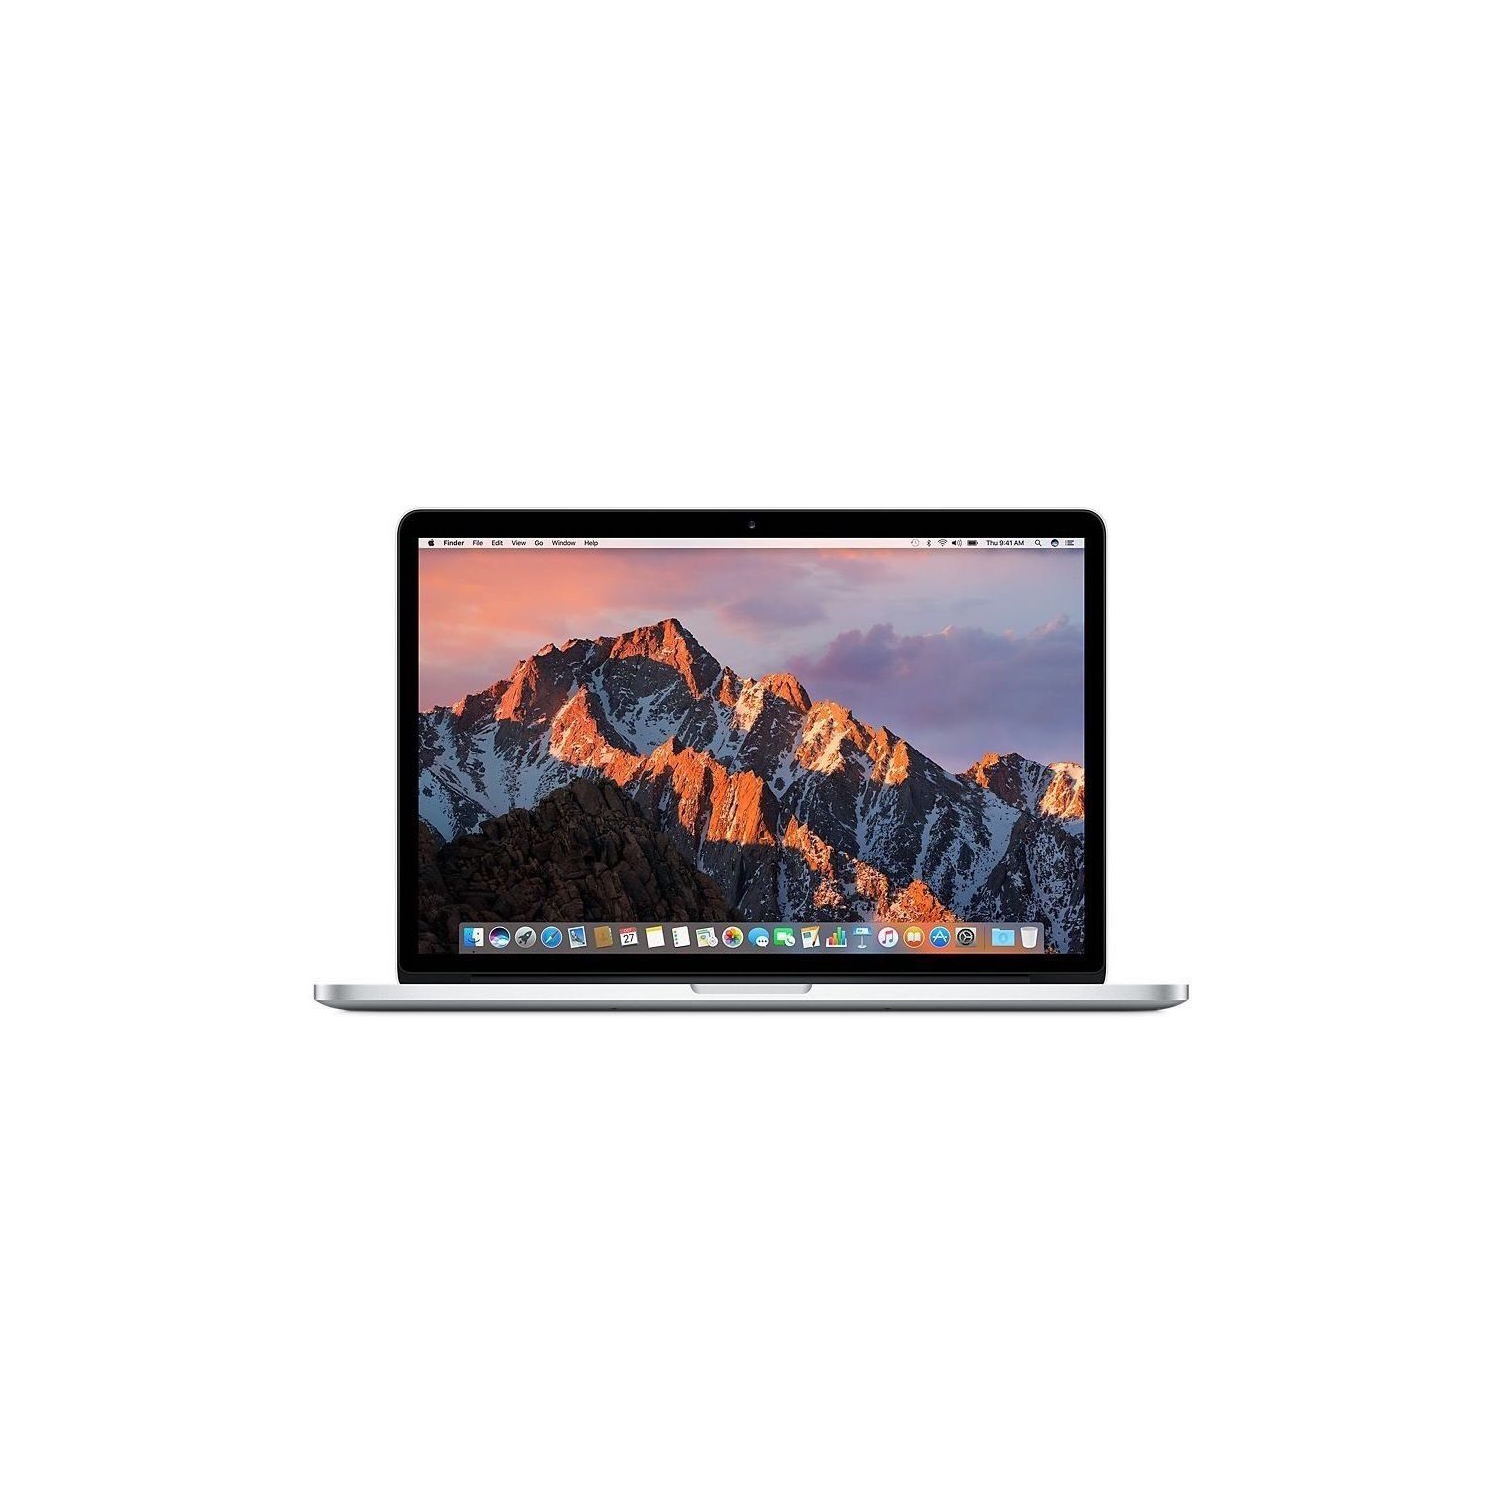 Refurbished (Good) - Apple MacBook Pro 15" with Retina Dispaly - Intel Core i7 2.2GHz, 16GB RAM, 500GB SSD, (2015 Model)